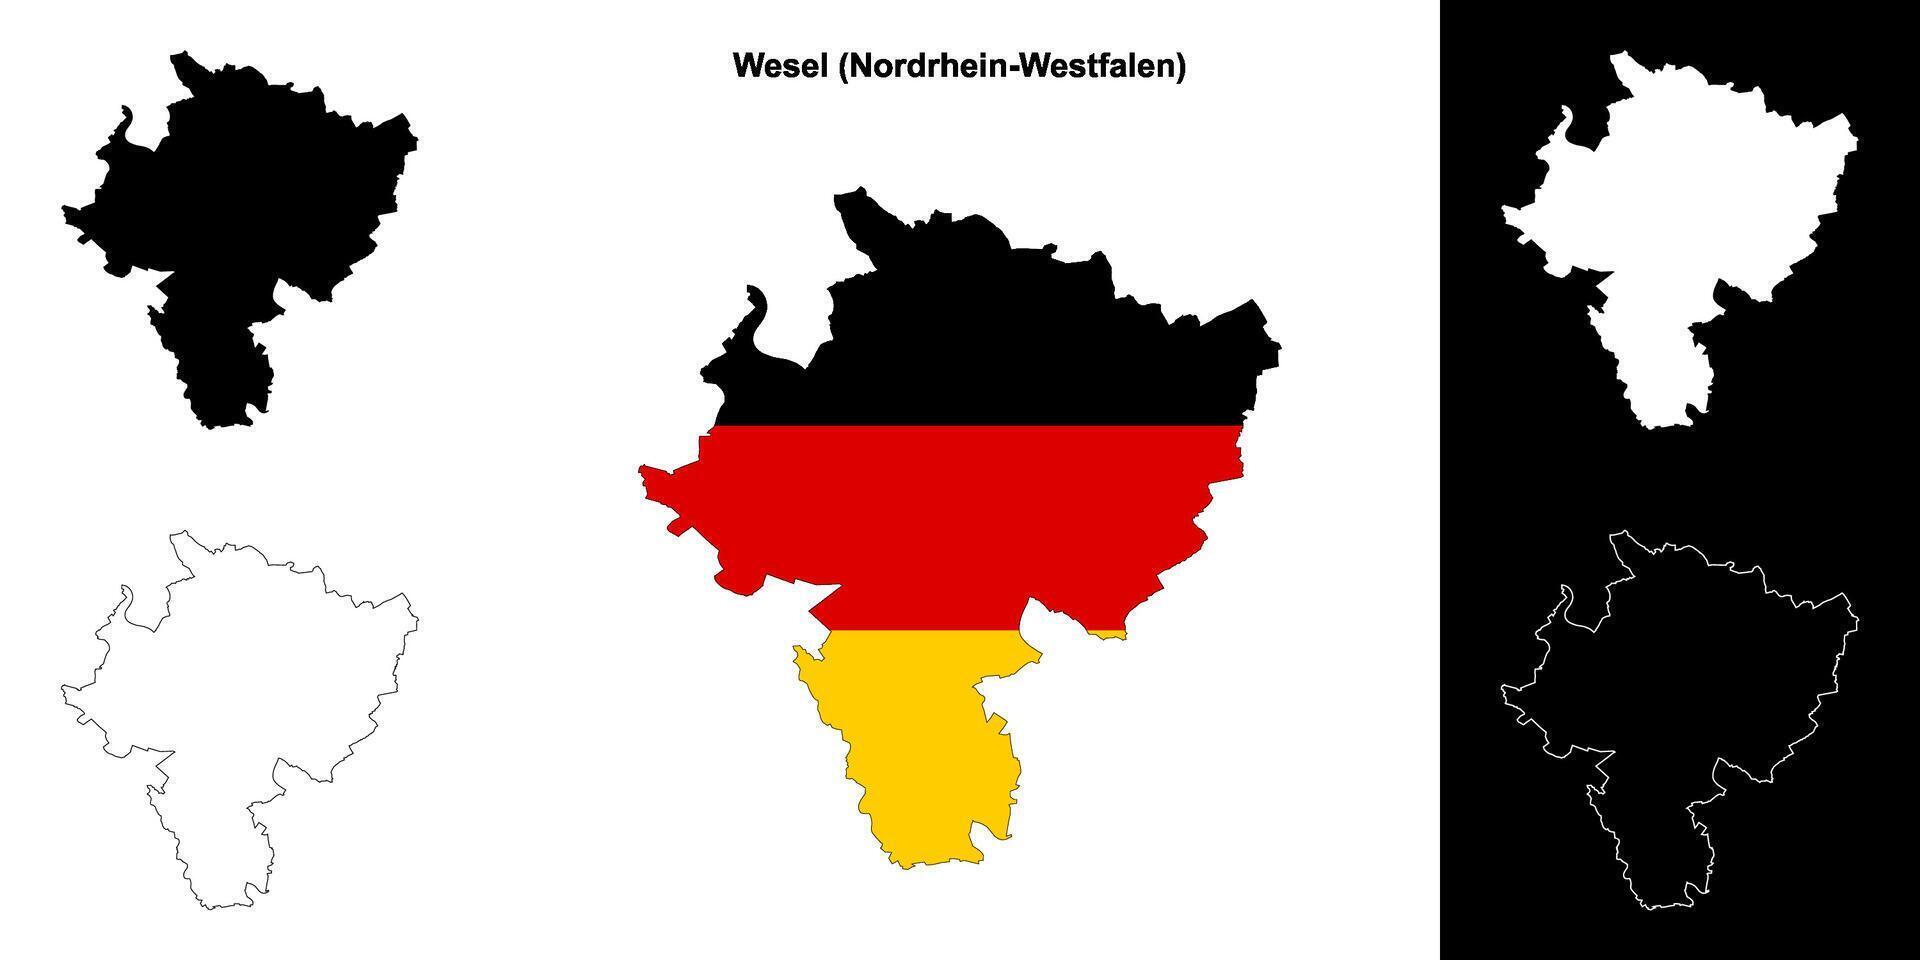 Wesel, Nordrhein-Westfalen vuoto schema carta geografica impostato vettore